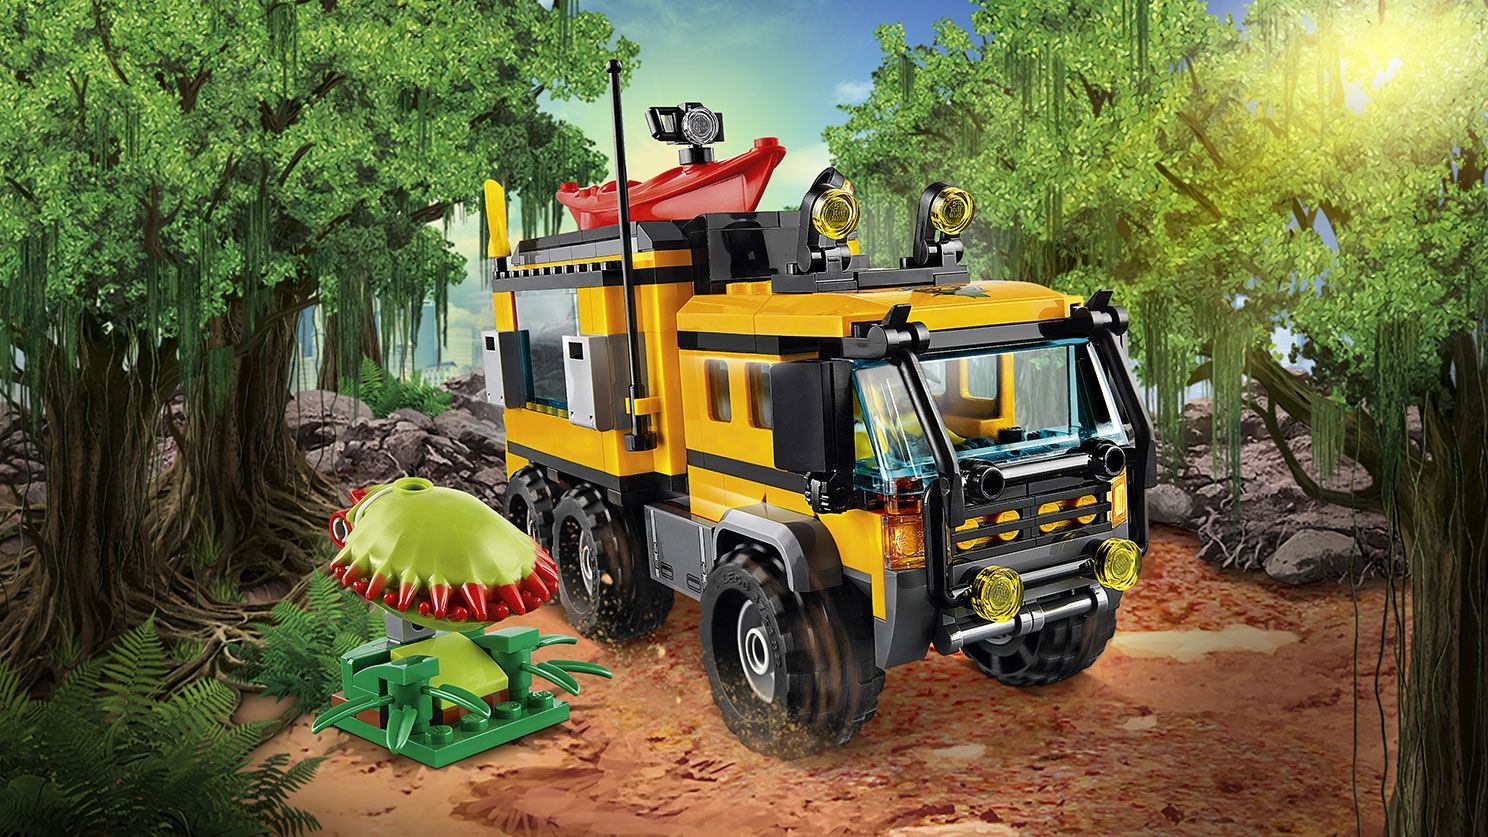 LEGO City 60160 Mobiles Dschungel-Labor LEGO_60160_WEB_SEC02_1488.jpg